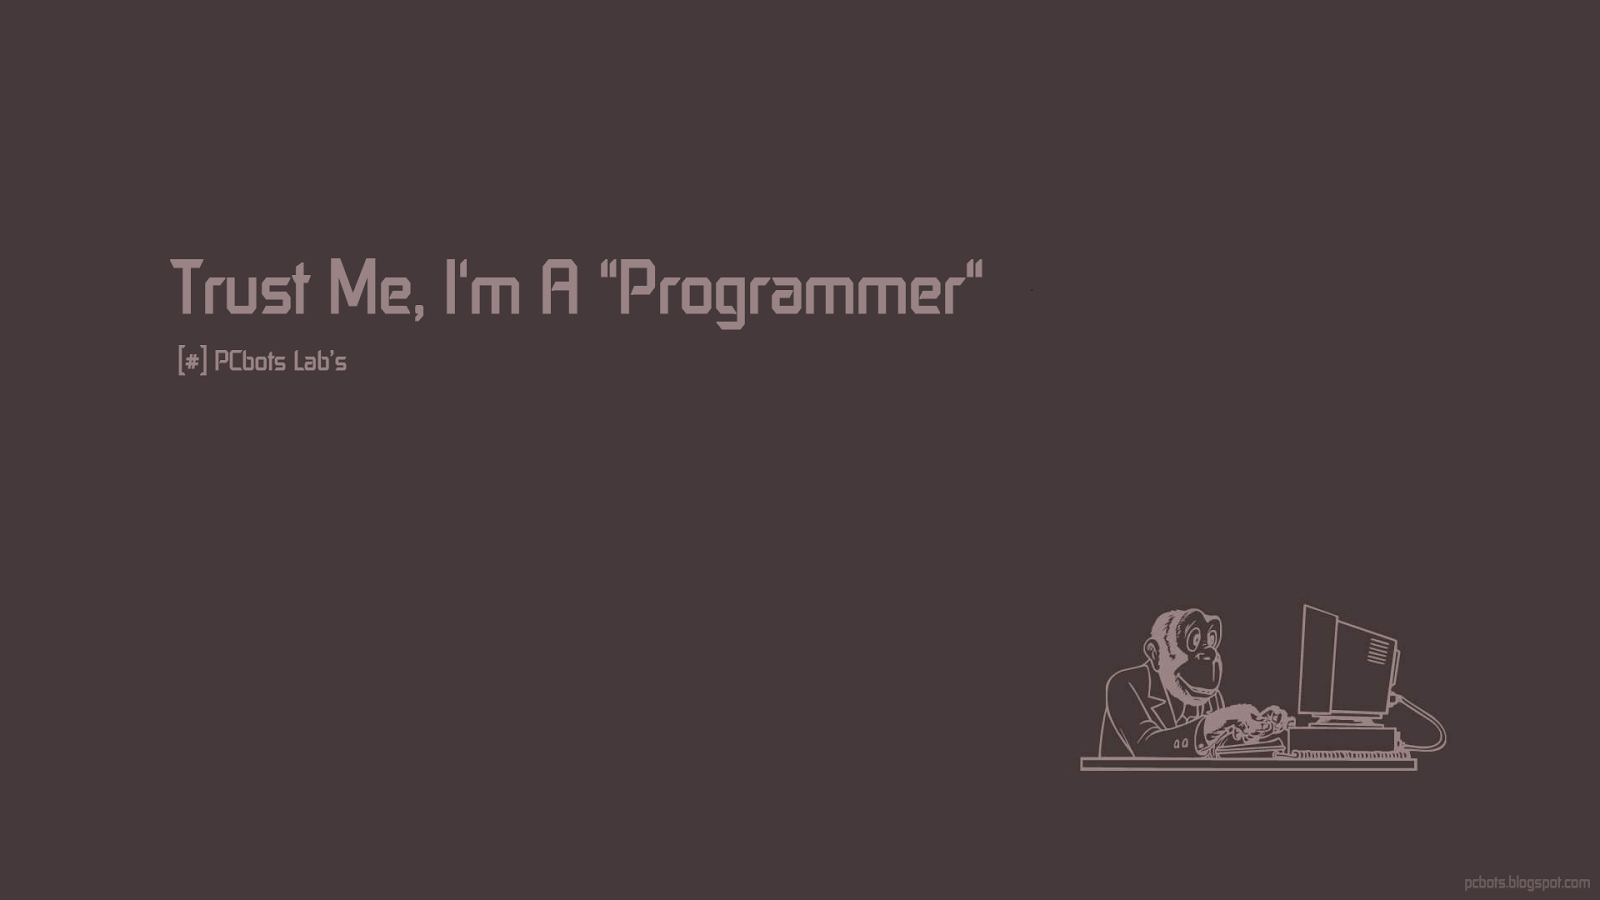 Programmer Wallpaper. Programmer Background and Image 45